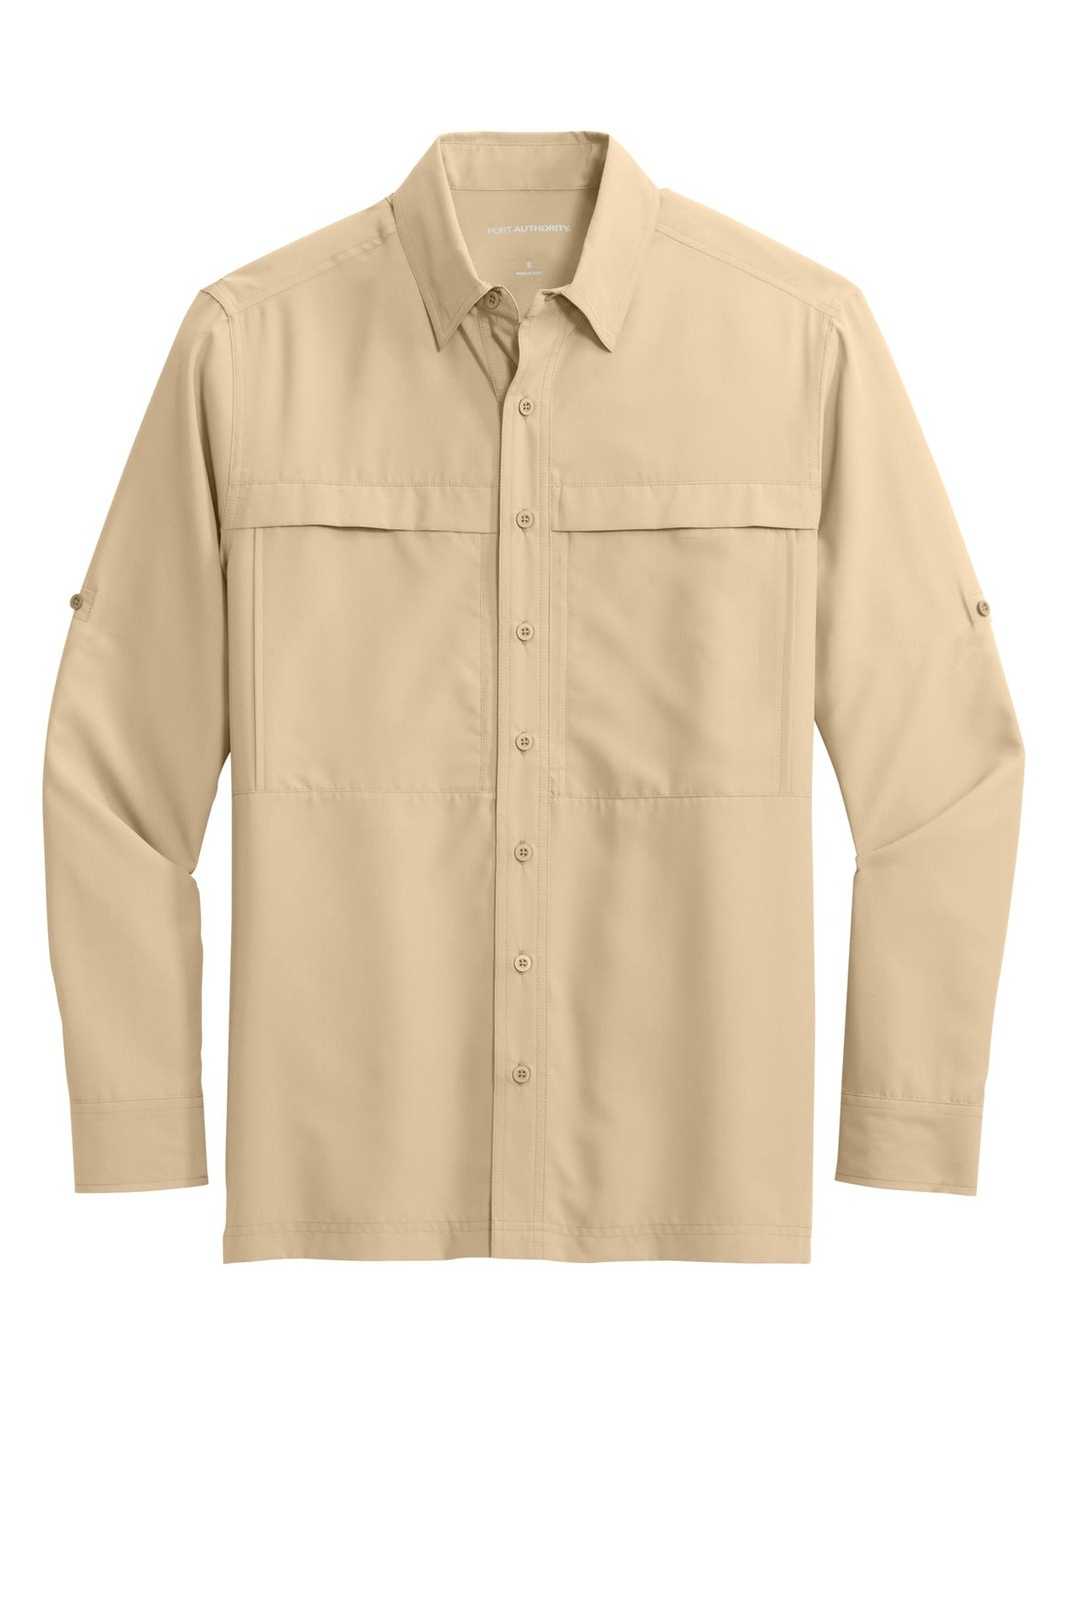 Port Authority W960 Long Sleeve UV Daybreak Shirt - Oat - HIT a Double - 1